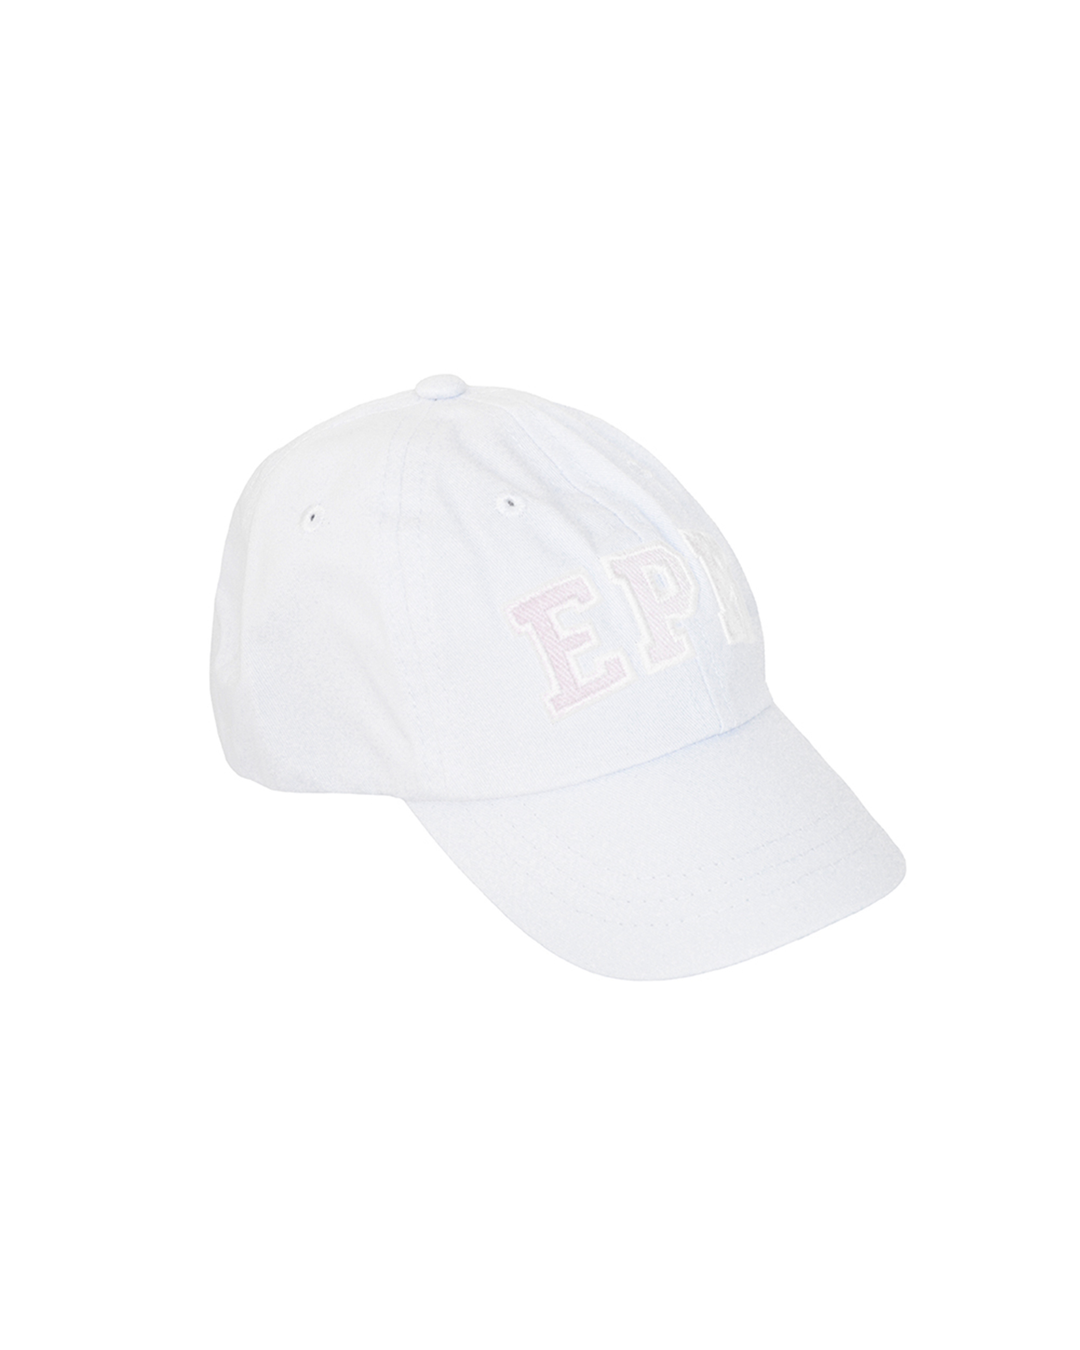 Gorra blanca con EPK rosado